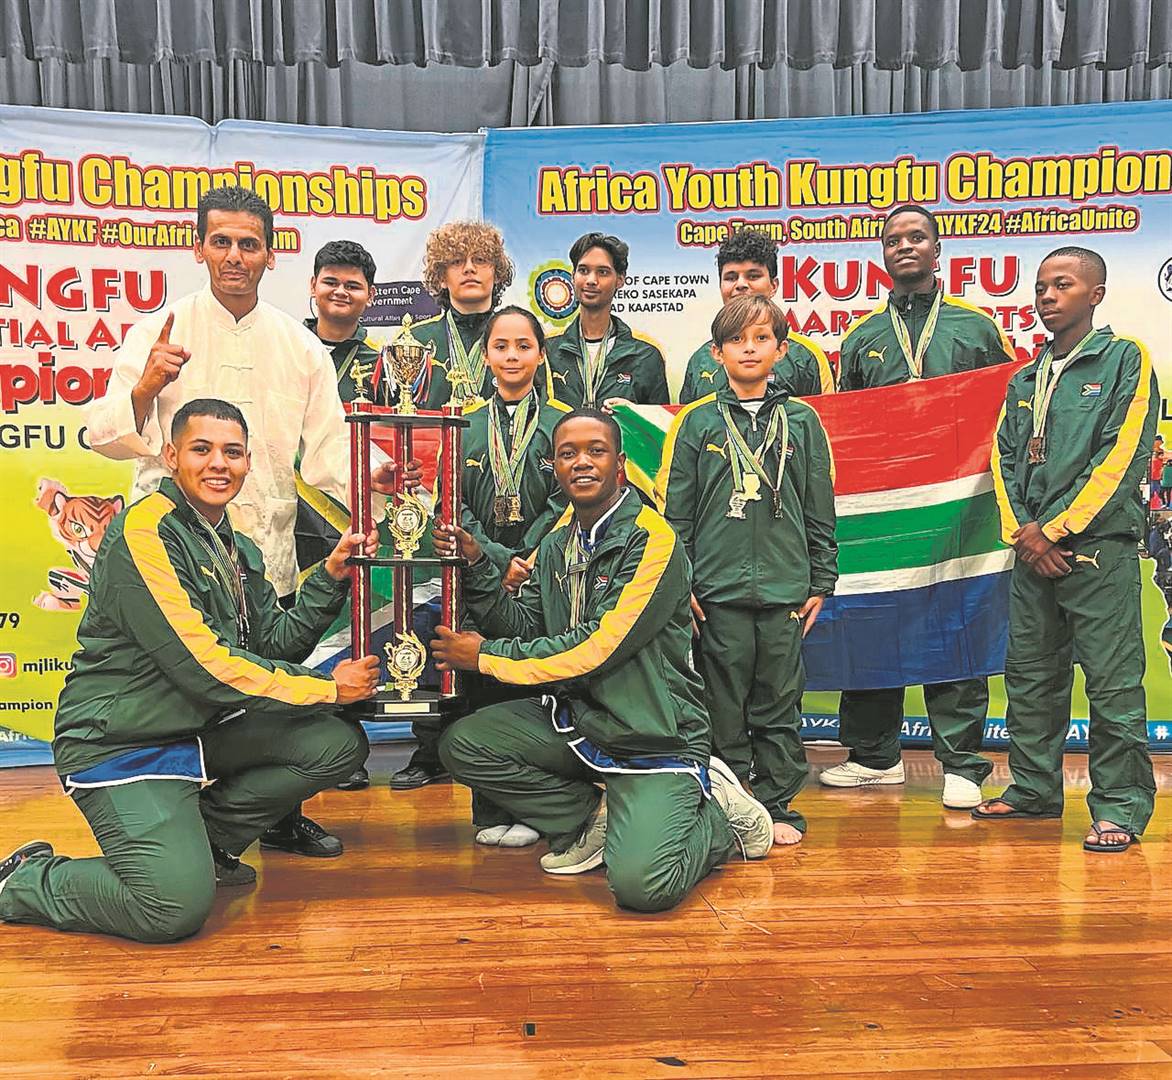 The SA Youth Kungfu Team.